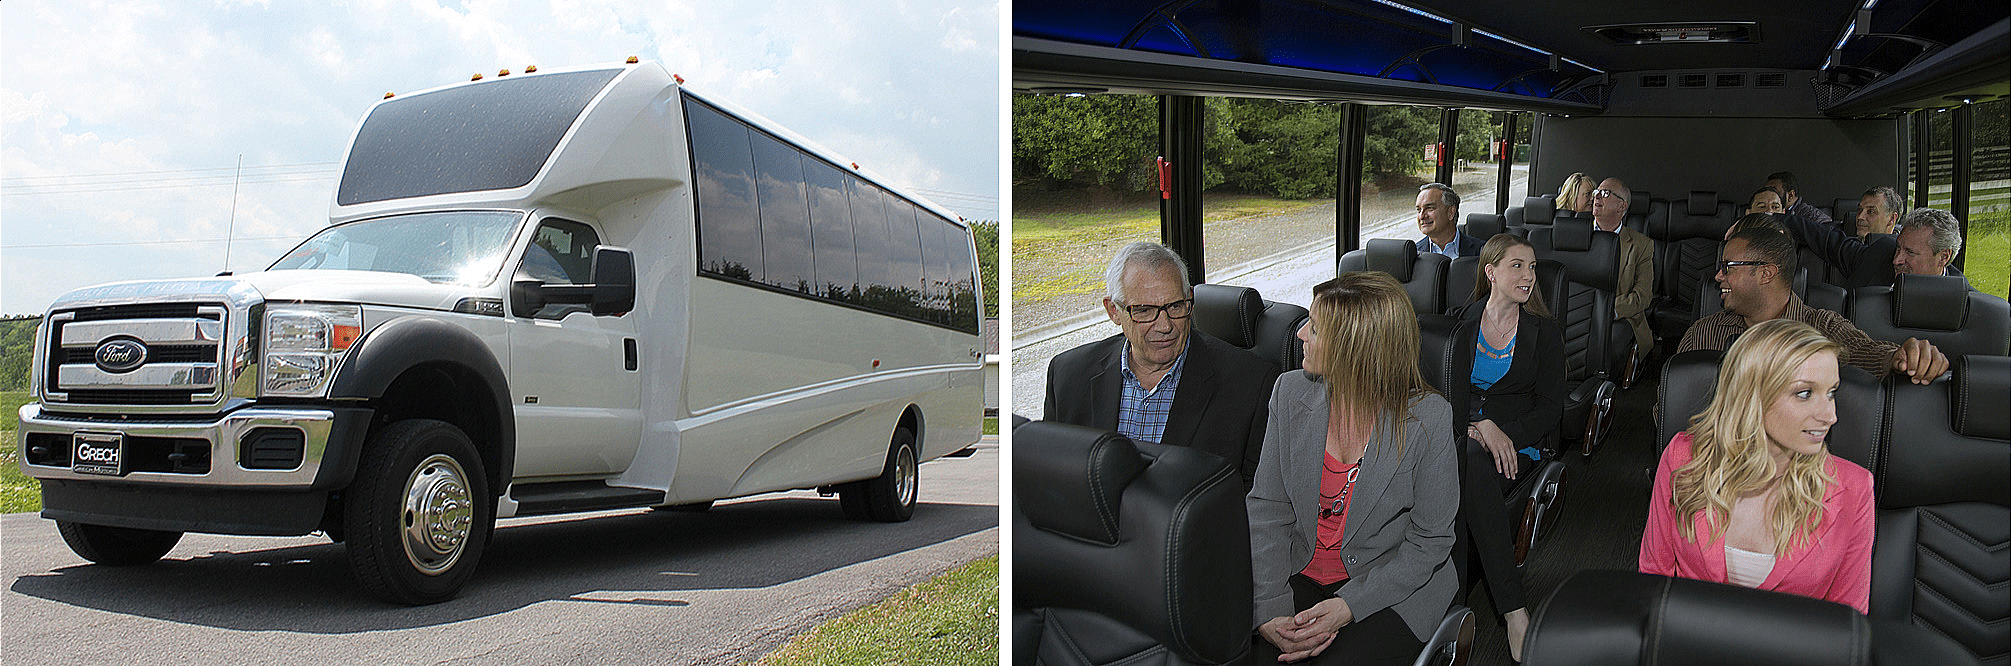 Executive Passenger Shuttle Bus - Interior and Exterior Photo